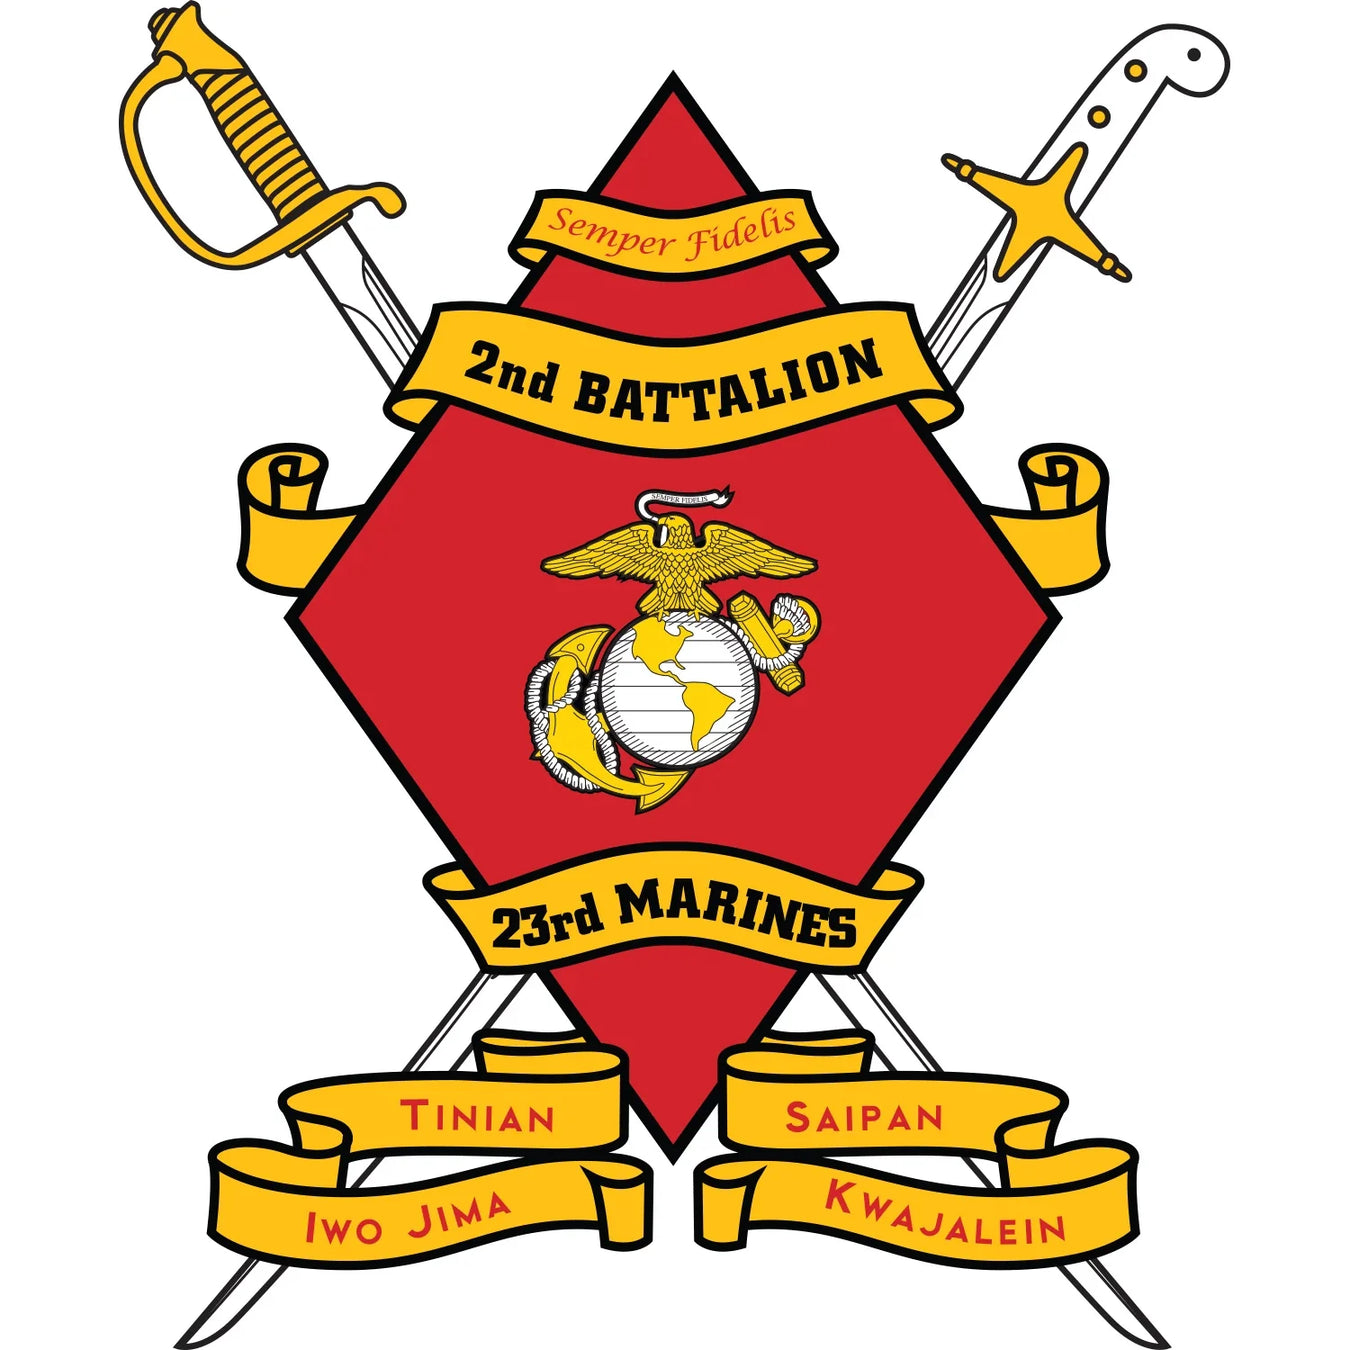 2nd Battalion, 23rd Marines